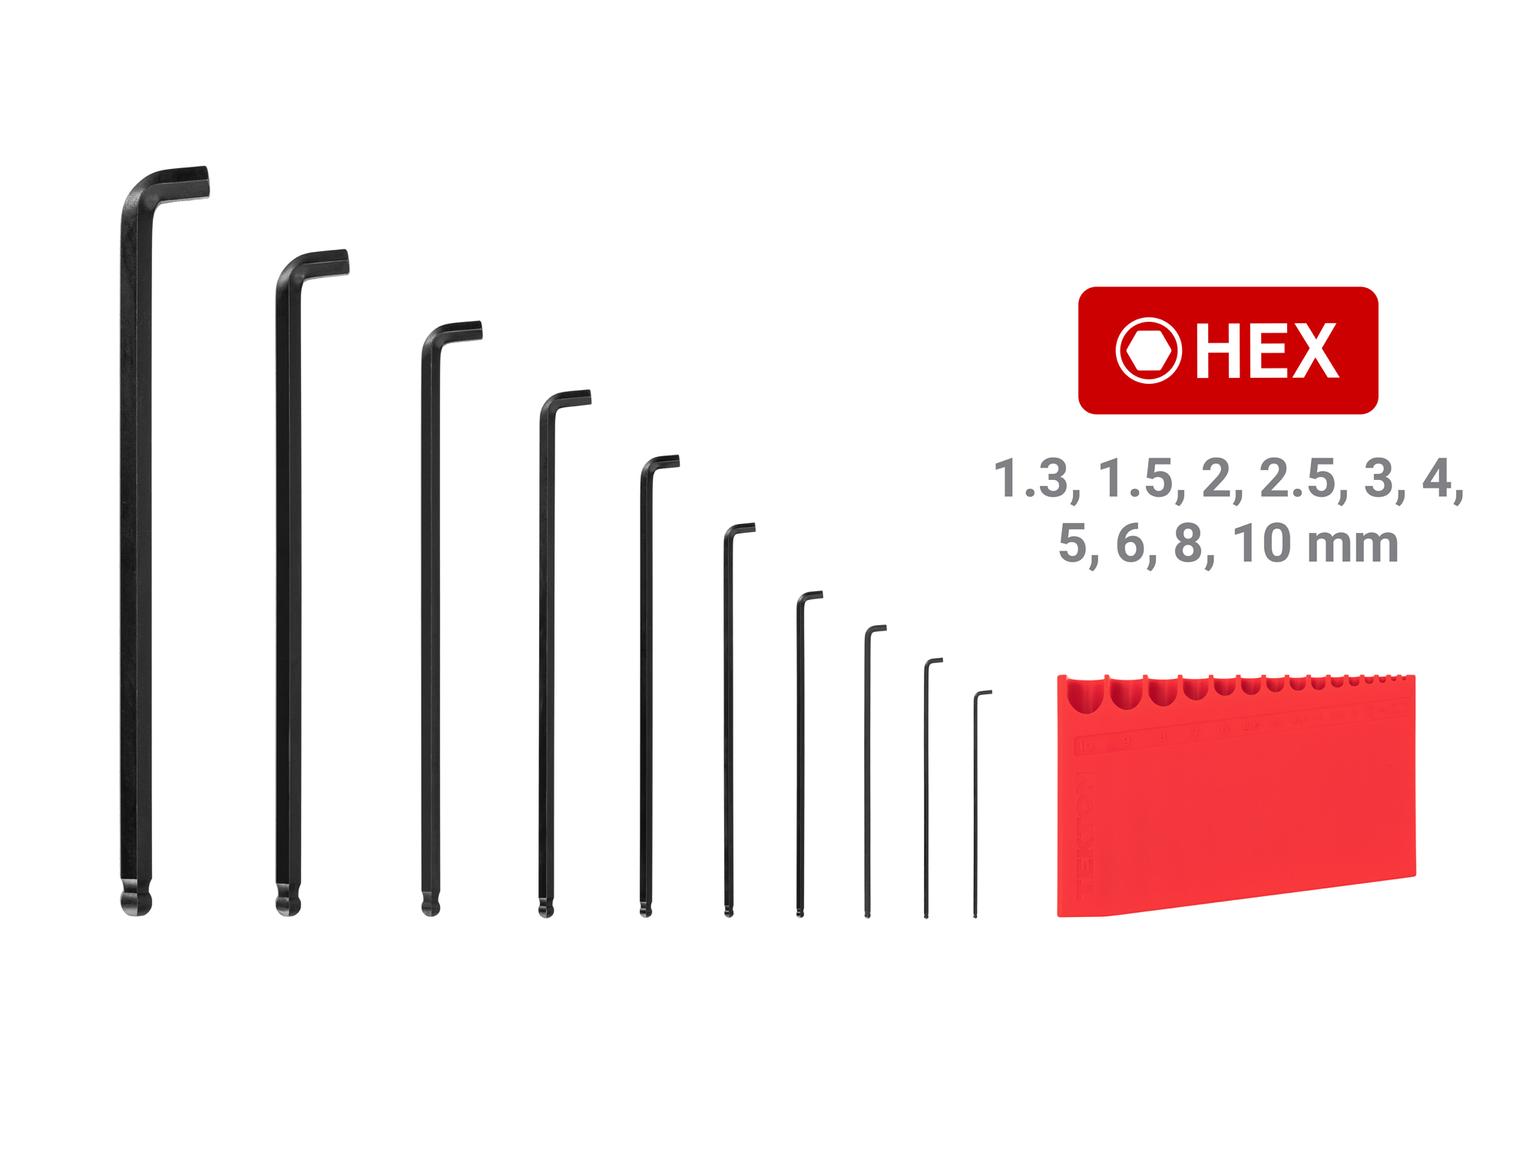 TEKTON KLX91212-D Short Arm Ball End Hex L-Key Set with Holder, 10-Piece (1.3-10 mm)